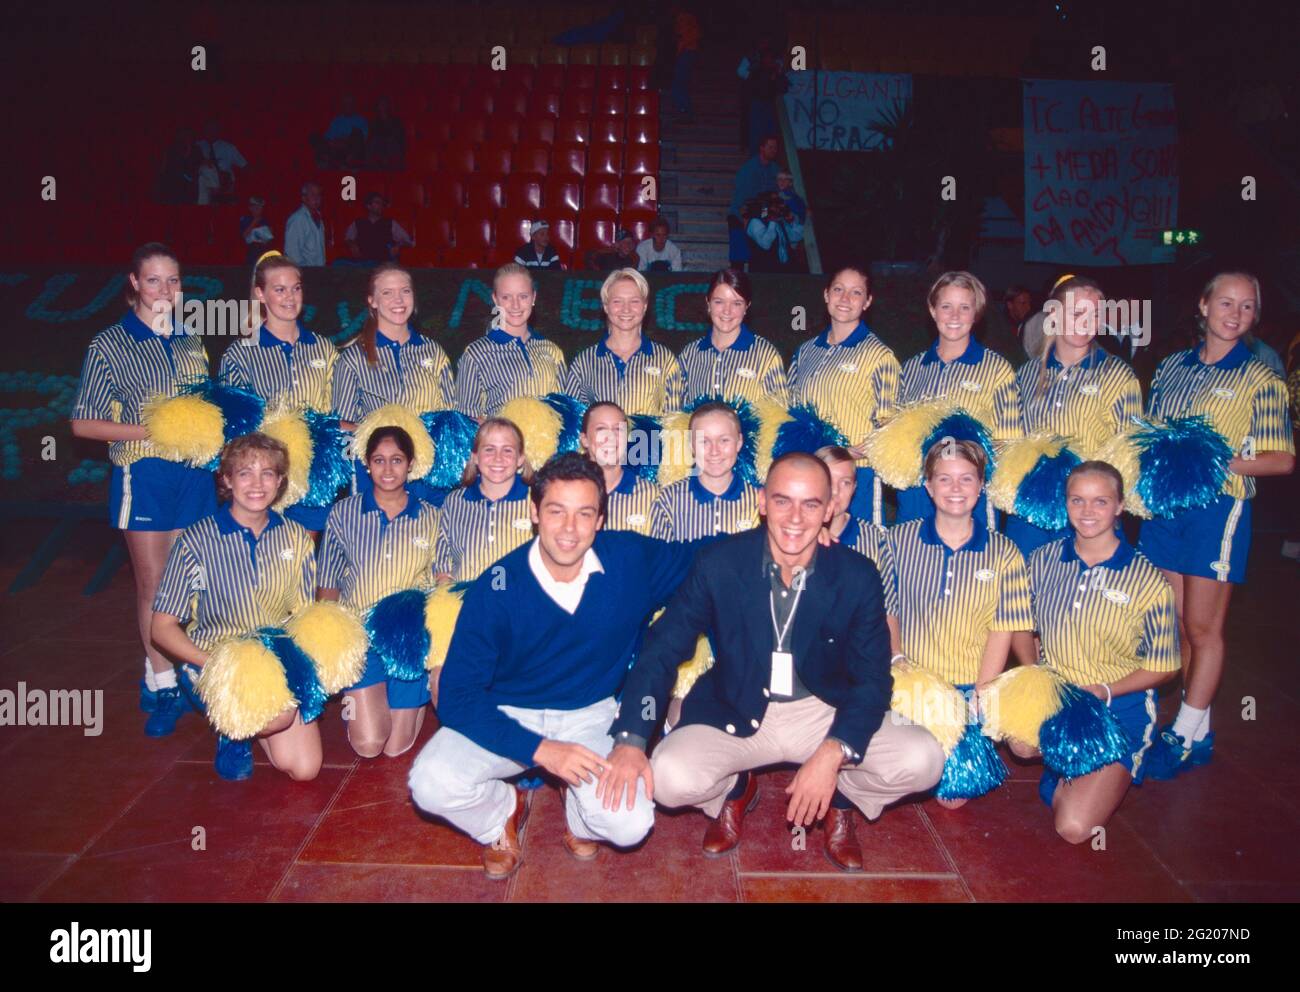 Swedish supporters tennis team, 2000s Stock Photo